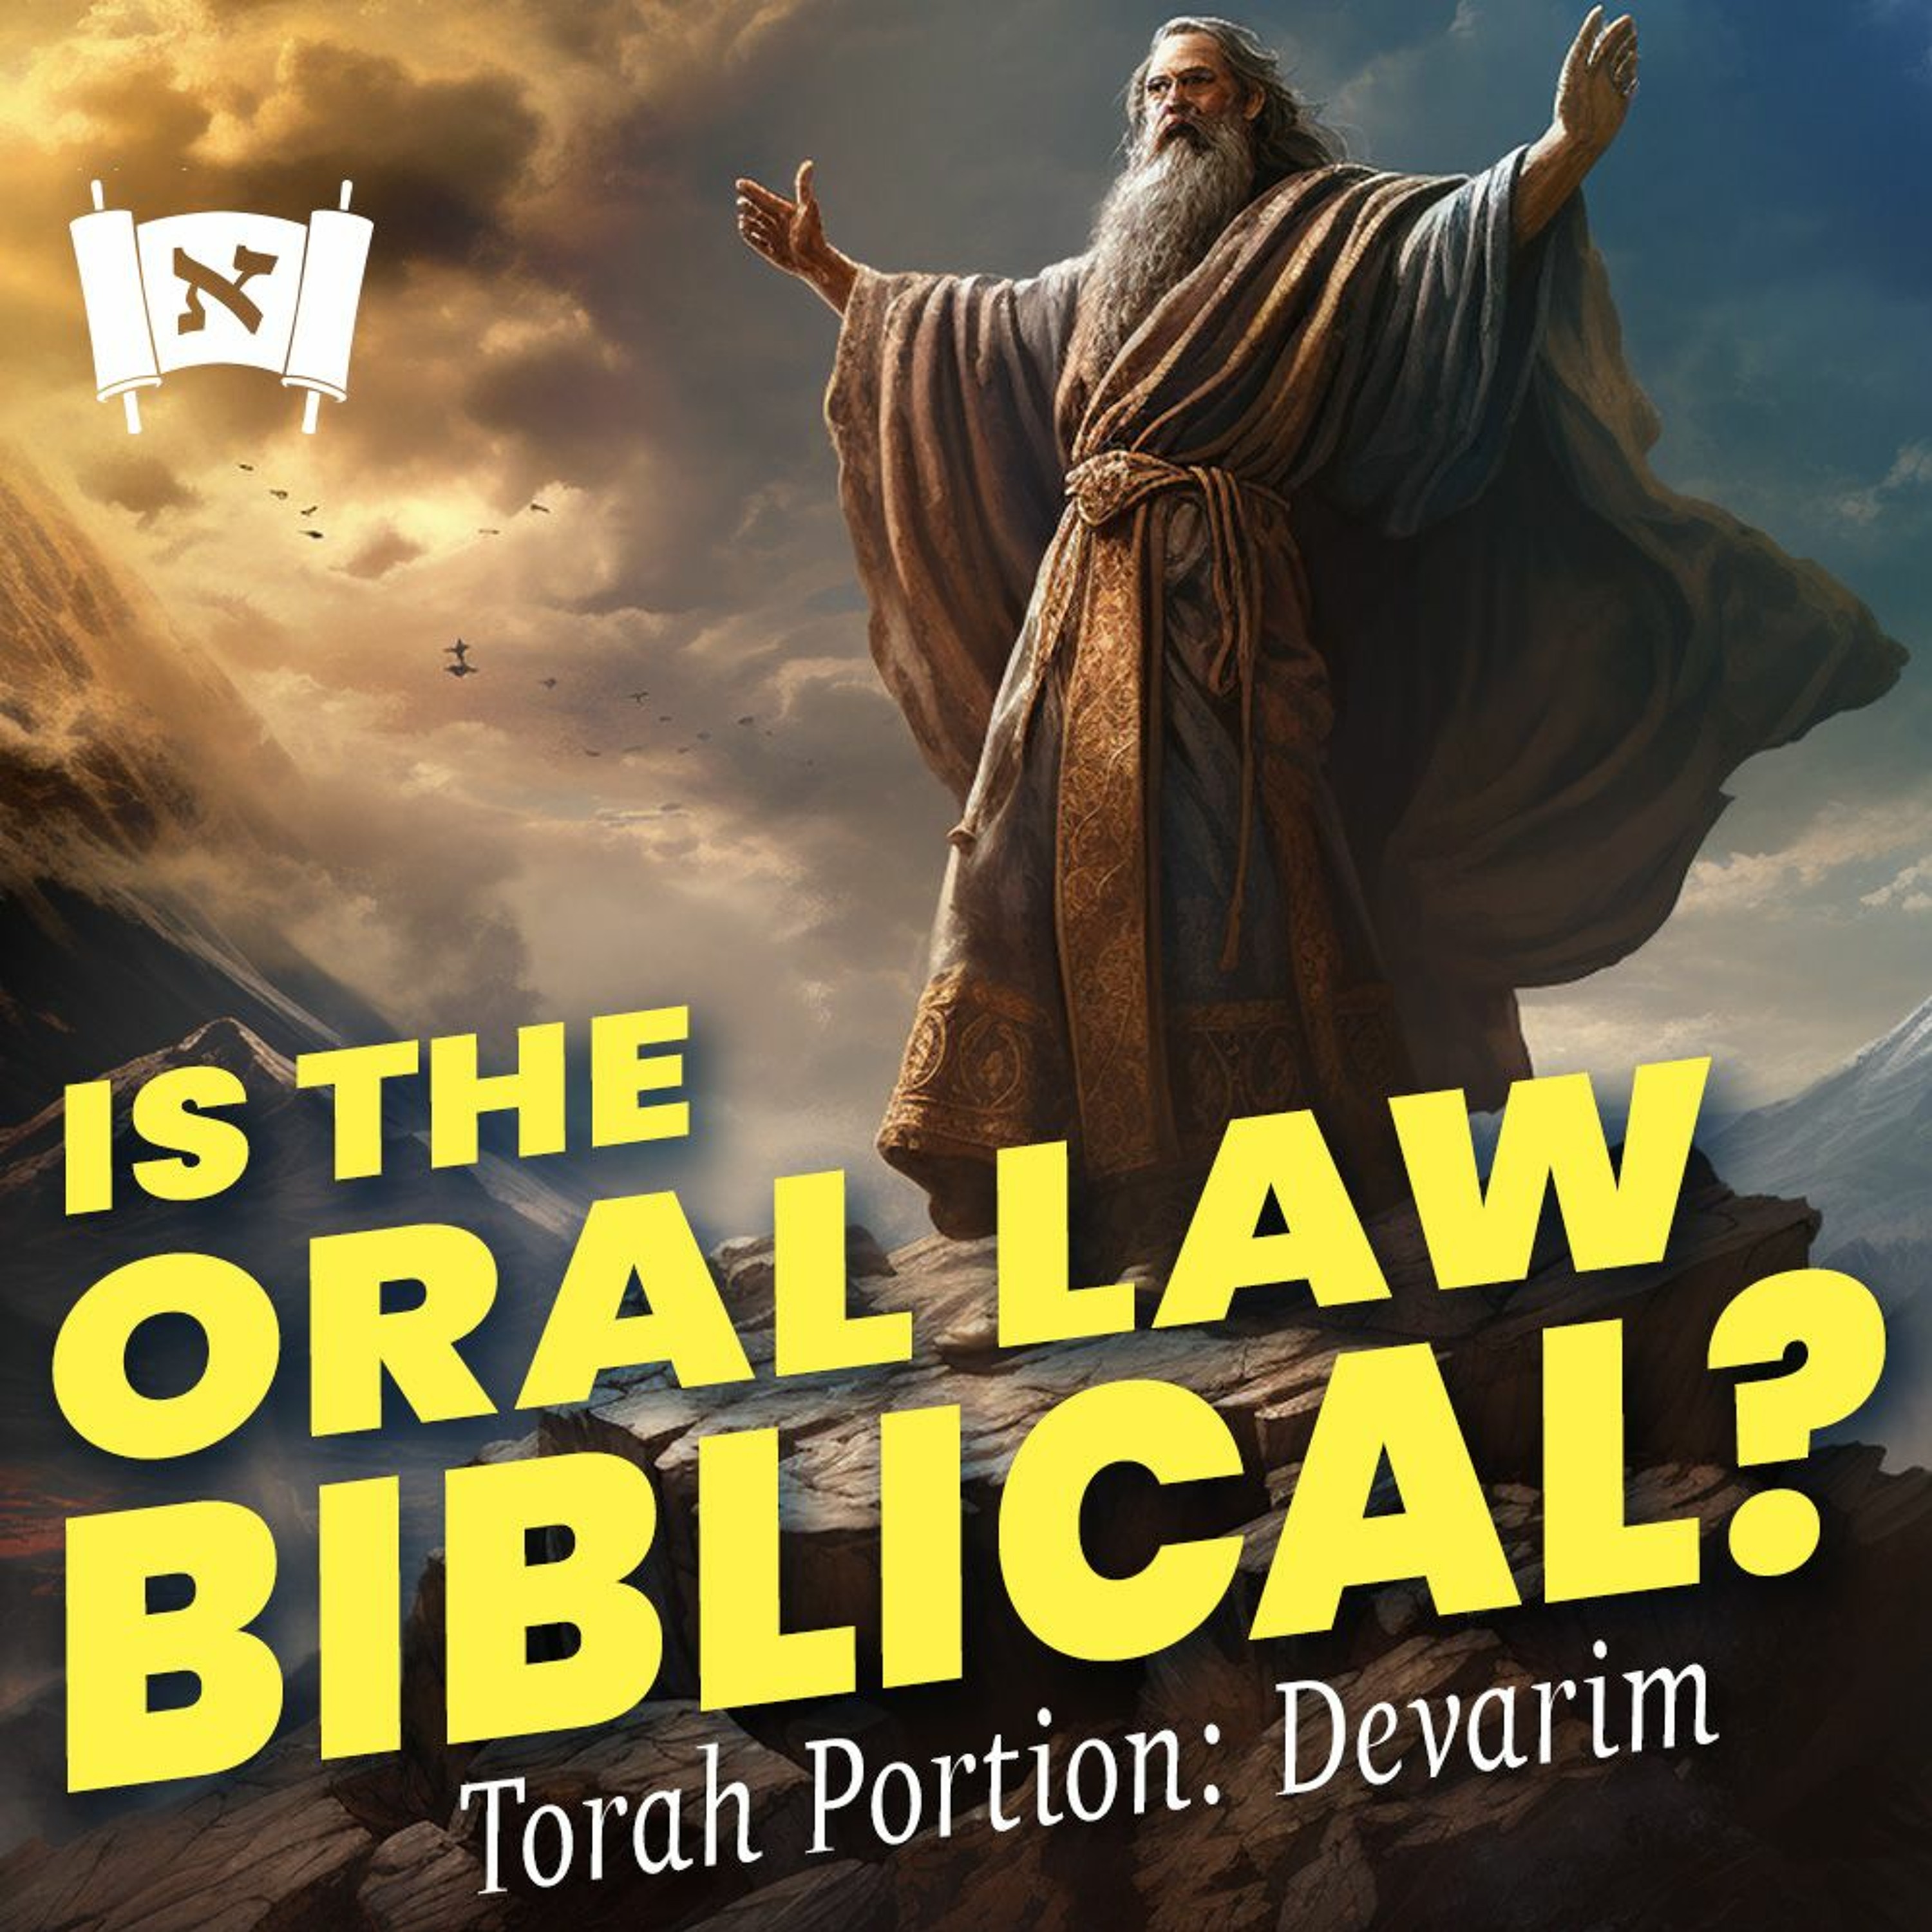 Moses & The Rabbis | Messianic Commentary on Torah Portion Devarim